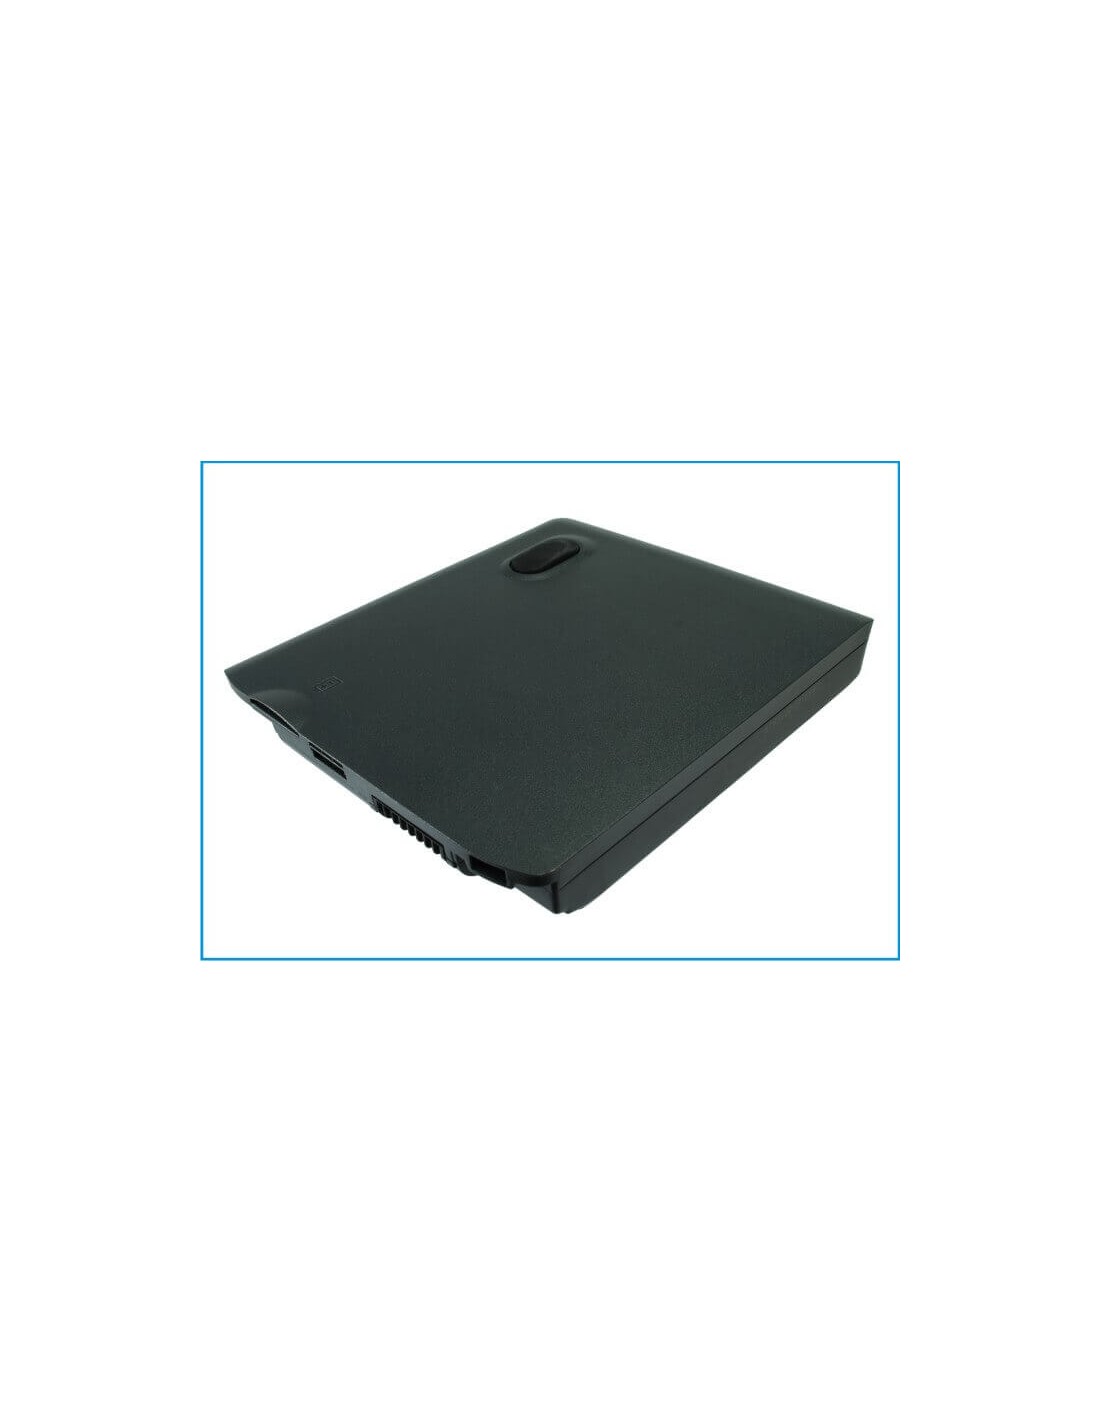 Grey Battery for Acer L51 14.4V, 4400mAh - 63.36Wh